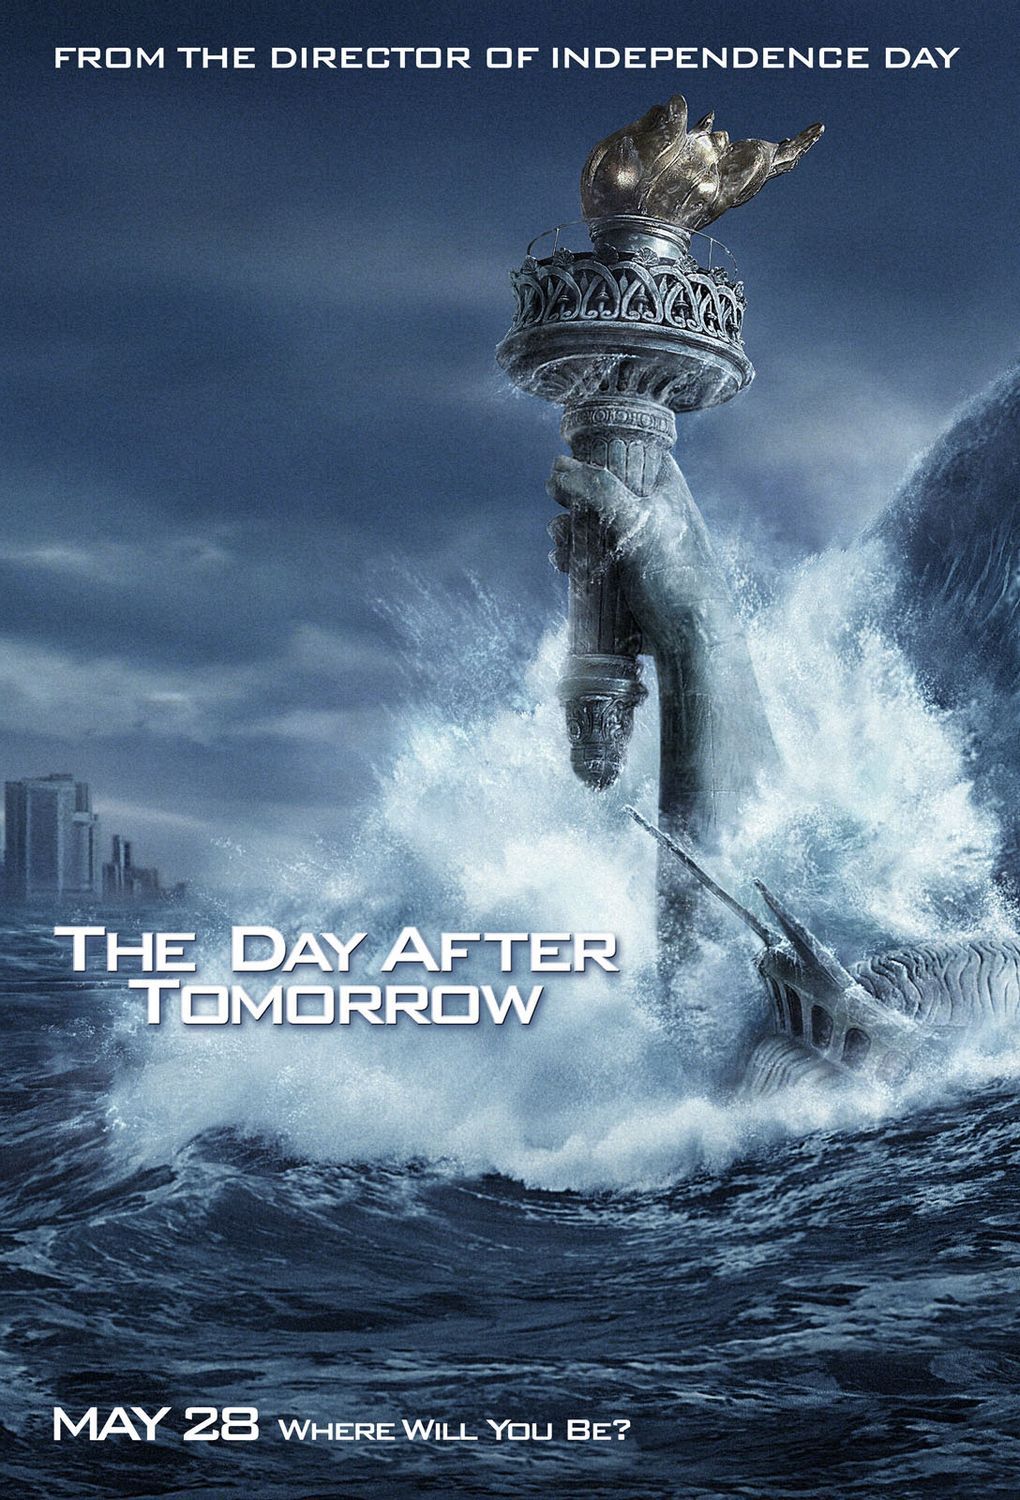 I Day After Tomorrow er endringene i havsirkulasjon urealistisk hurtige. (Foto: Twentieth Century Fox Norway)